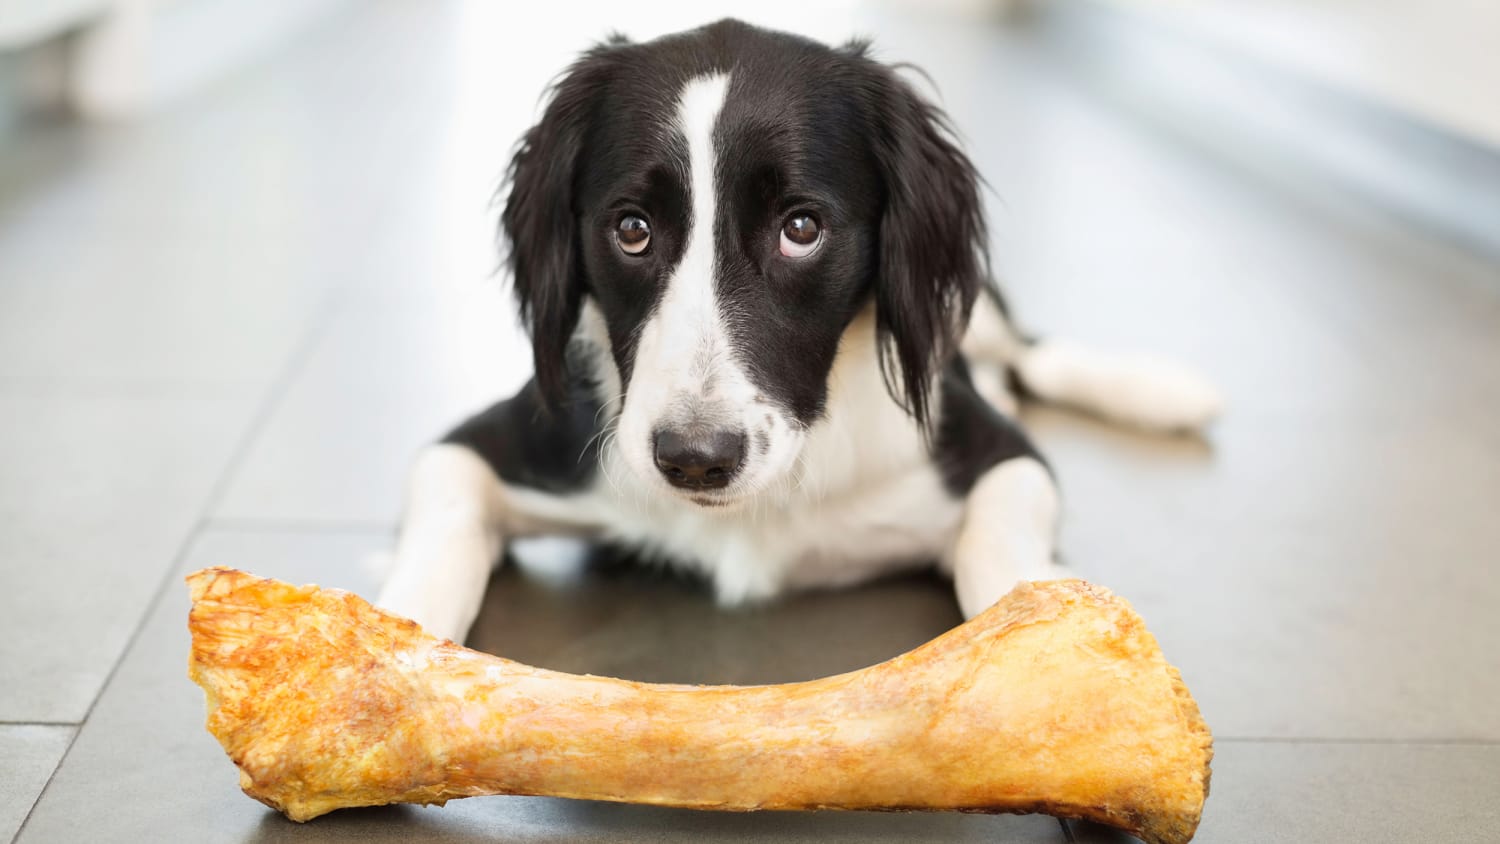 dog chew bones